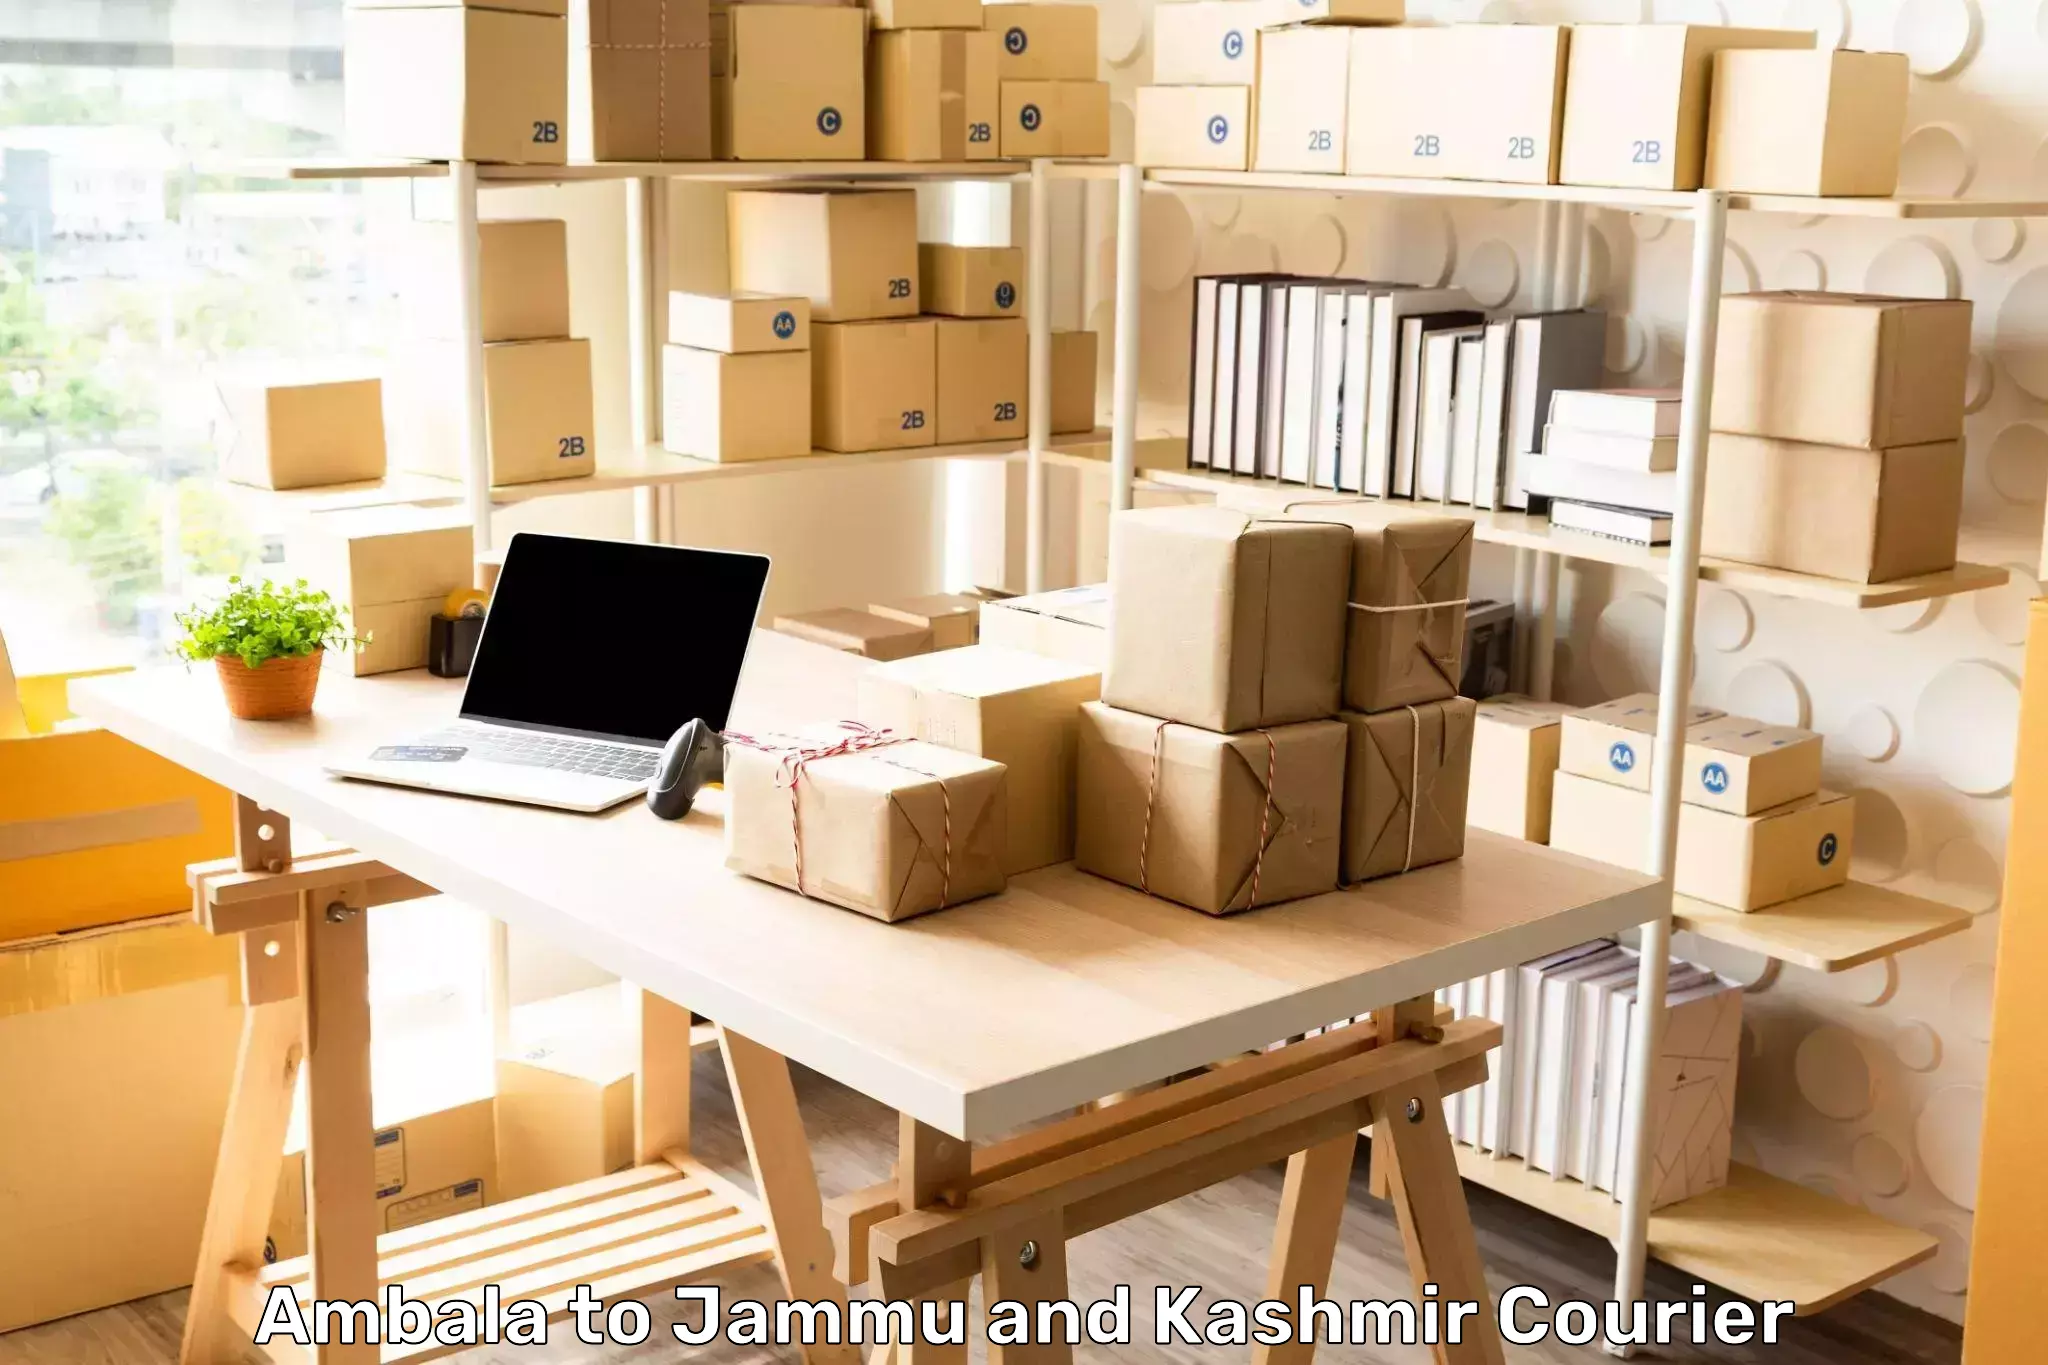 Professional courier handling Ambala to Srinagar Kashmir